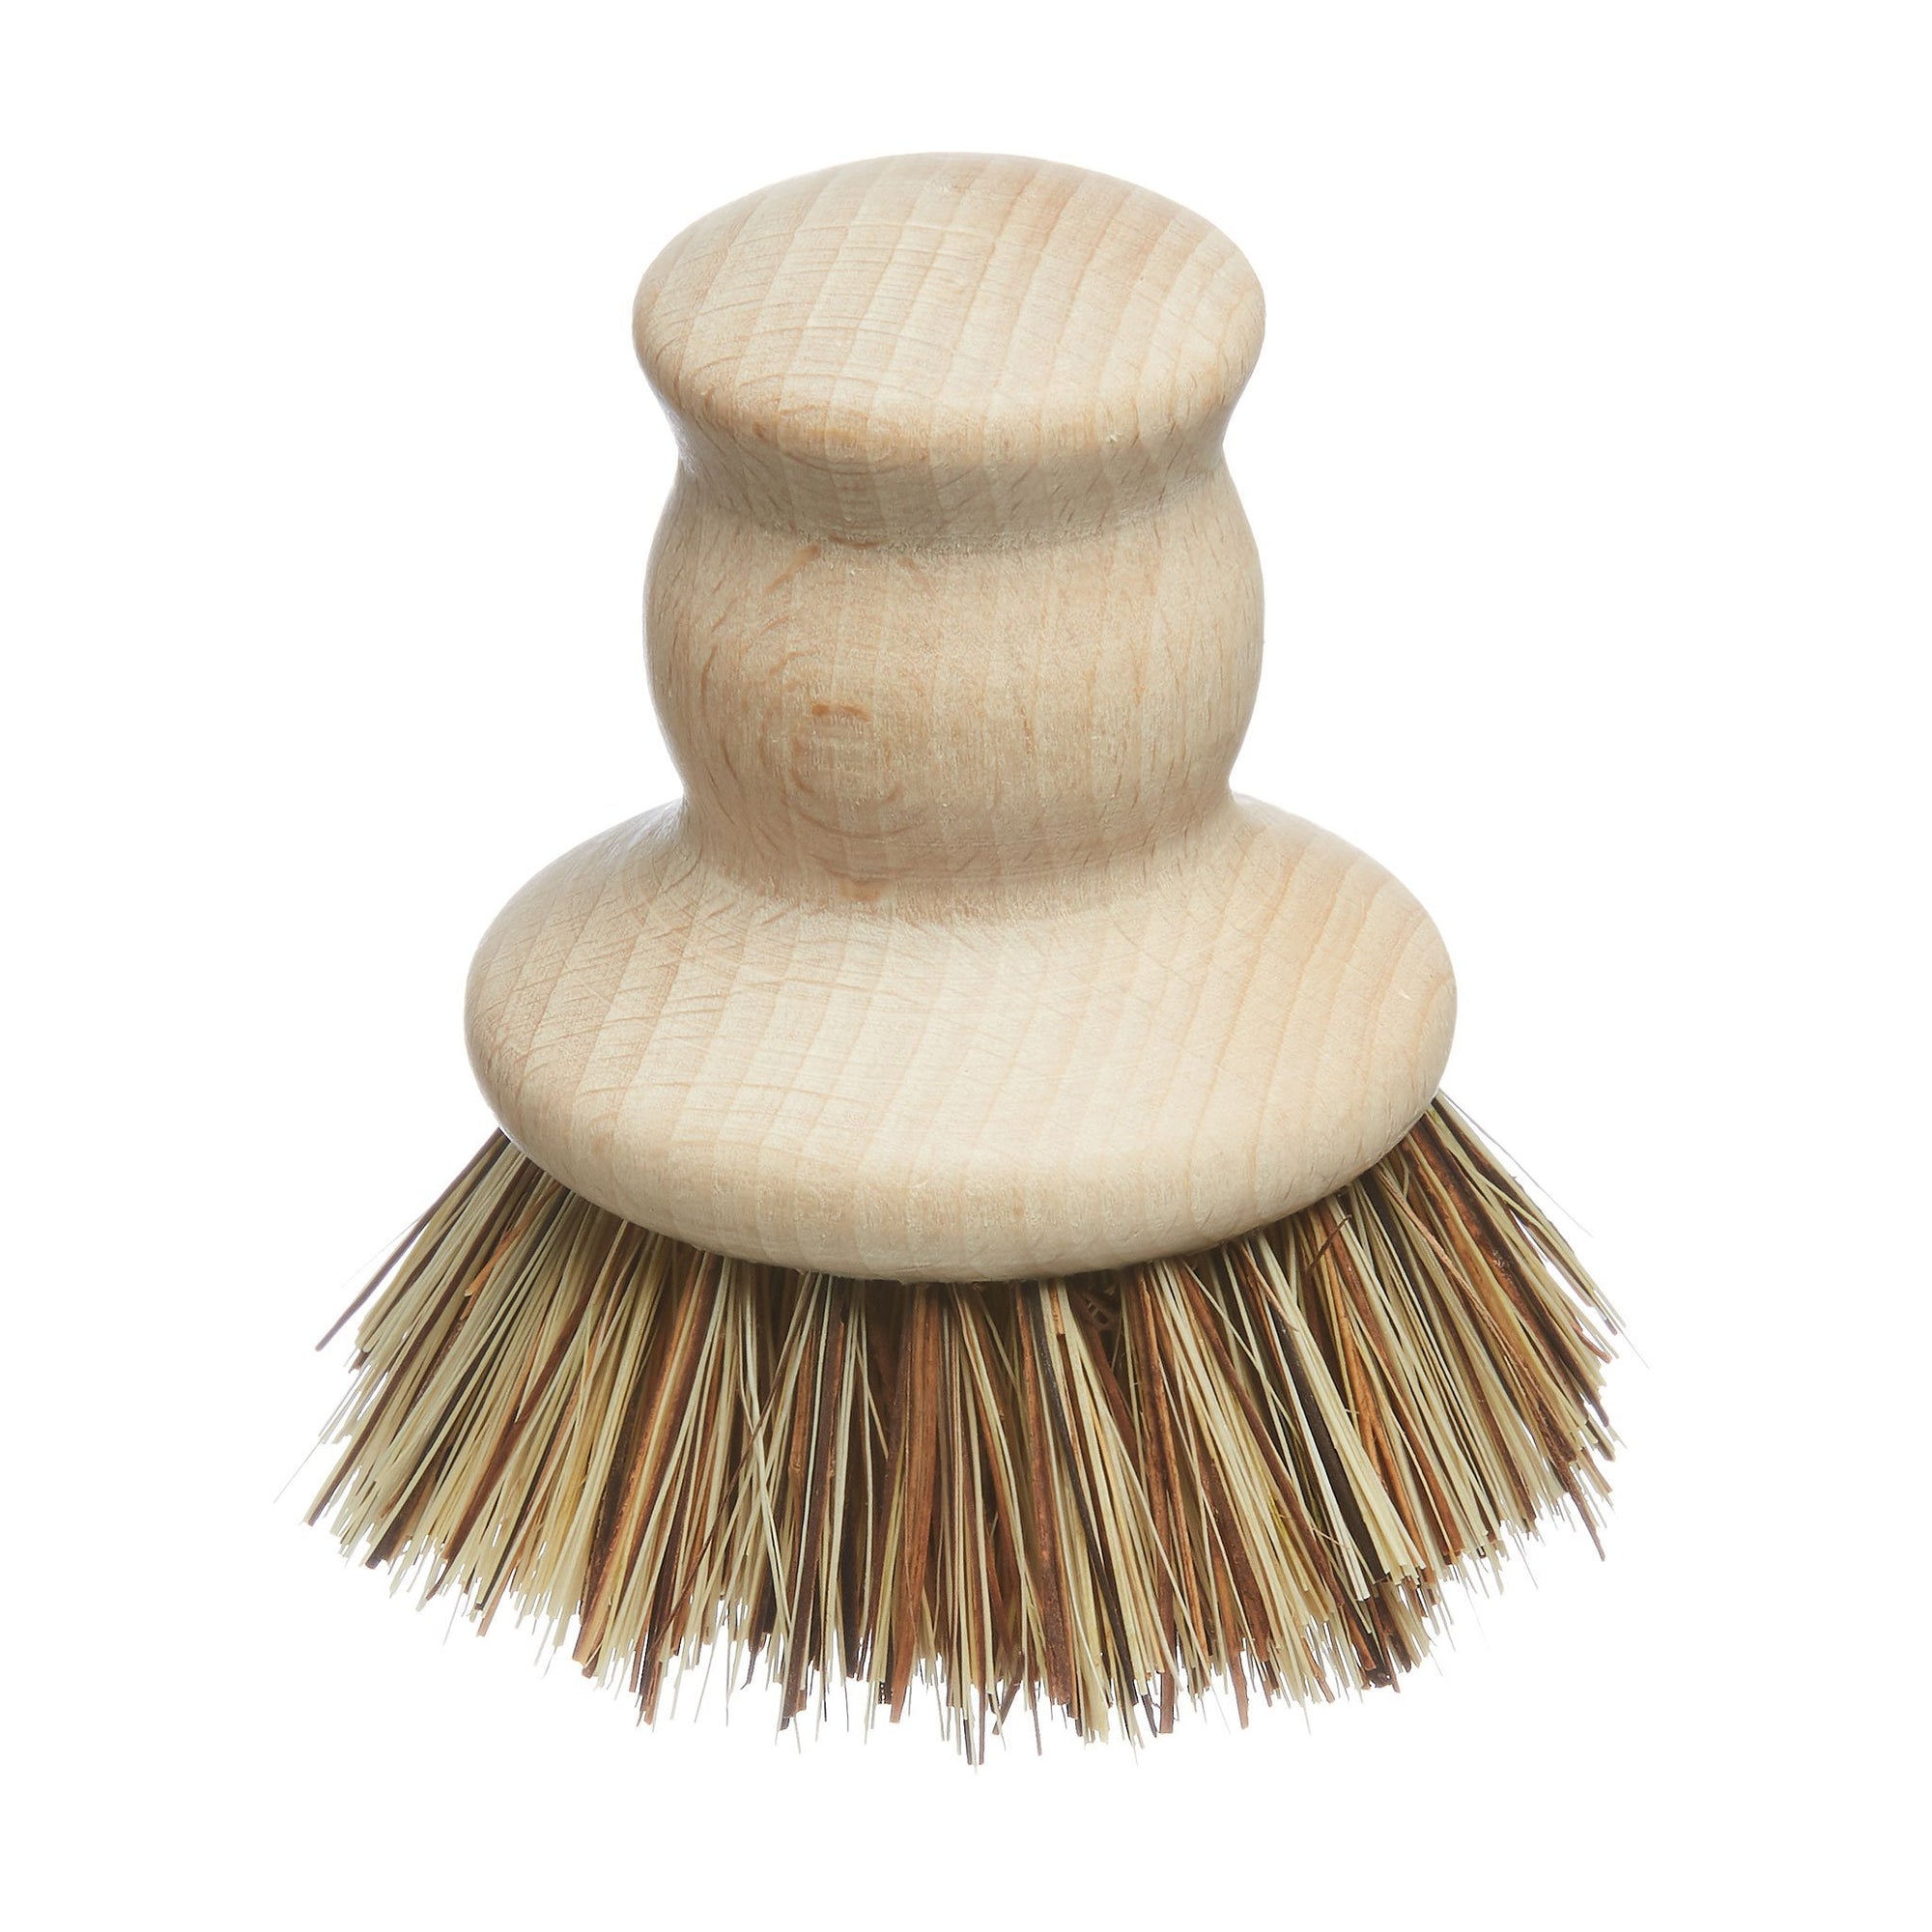 Wooden Pot Brush | Washing Up Brush - The Naughty Shrew